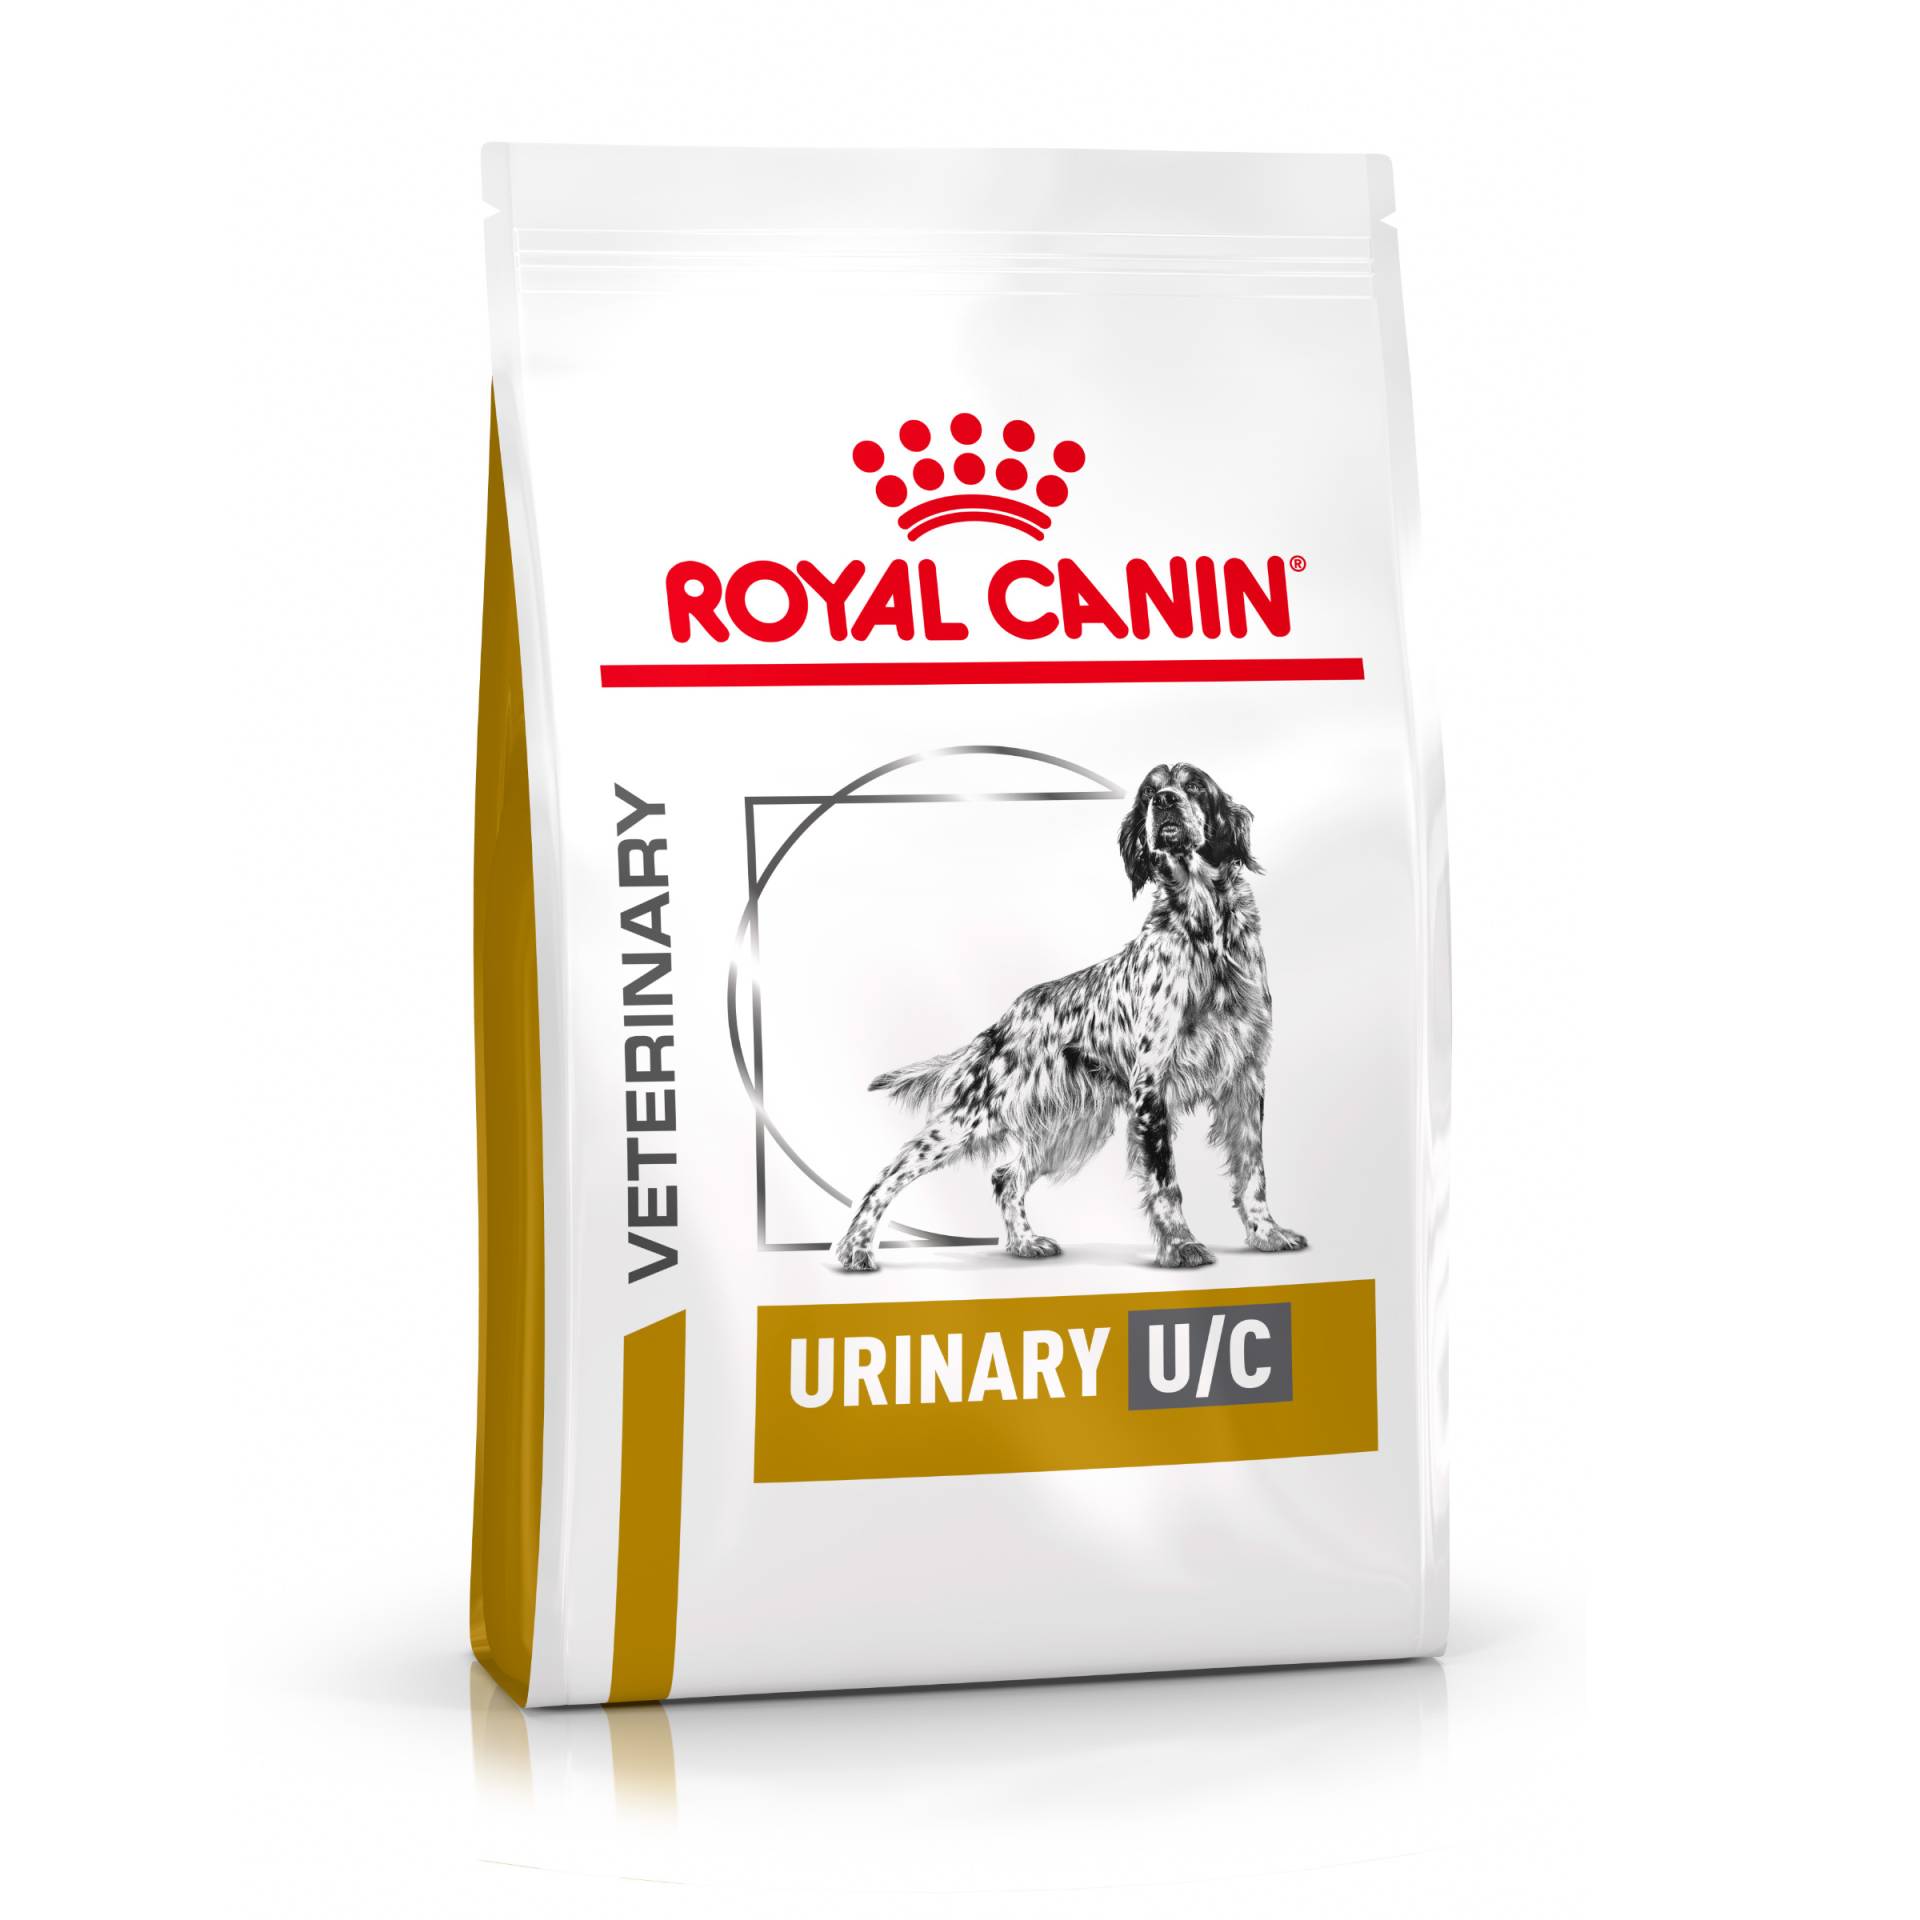 Royal Canin Veterinary Canine Urinary U/C - 14 kg von Royal Canin Veterinary Diet